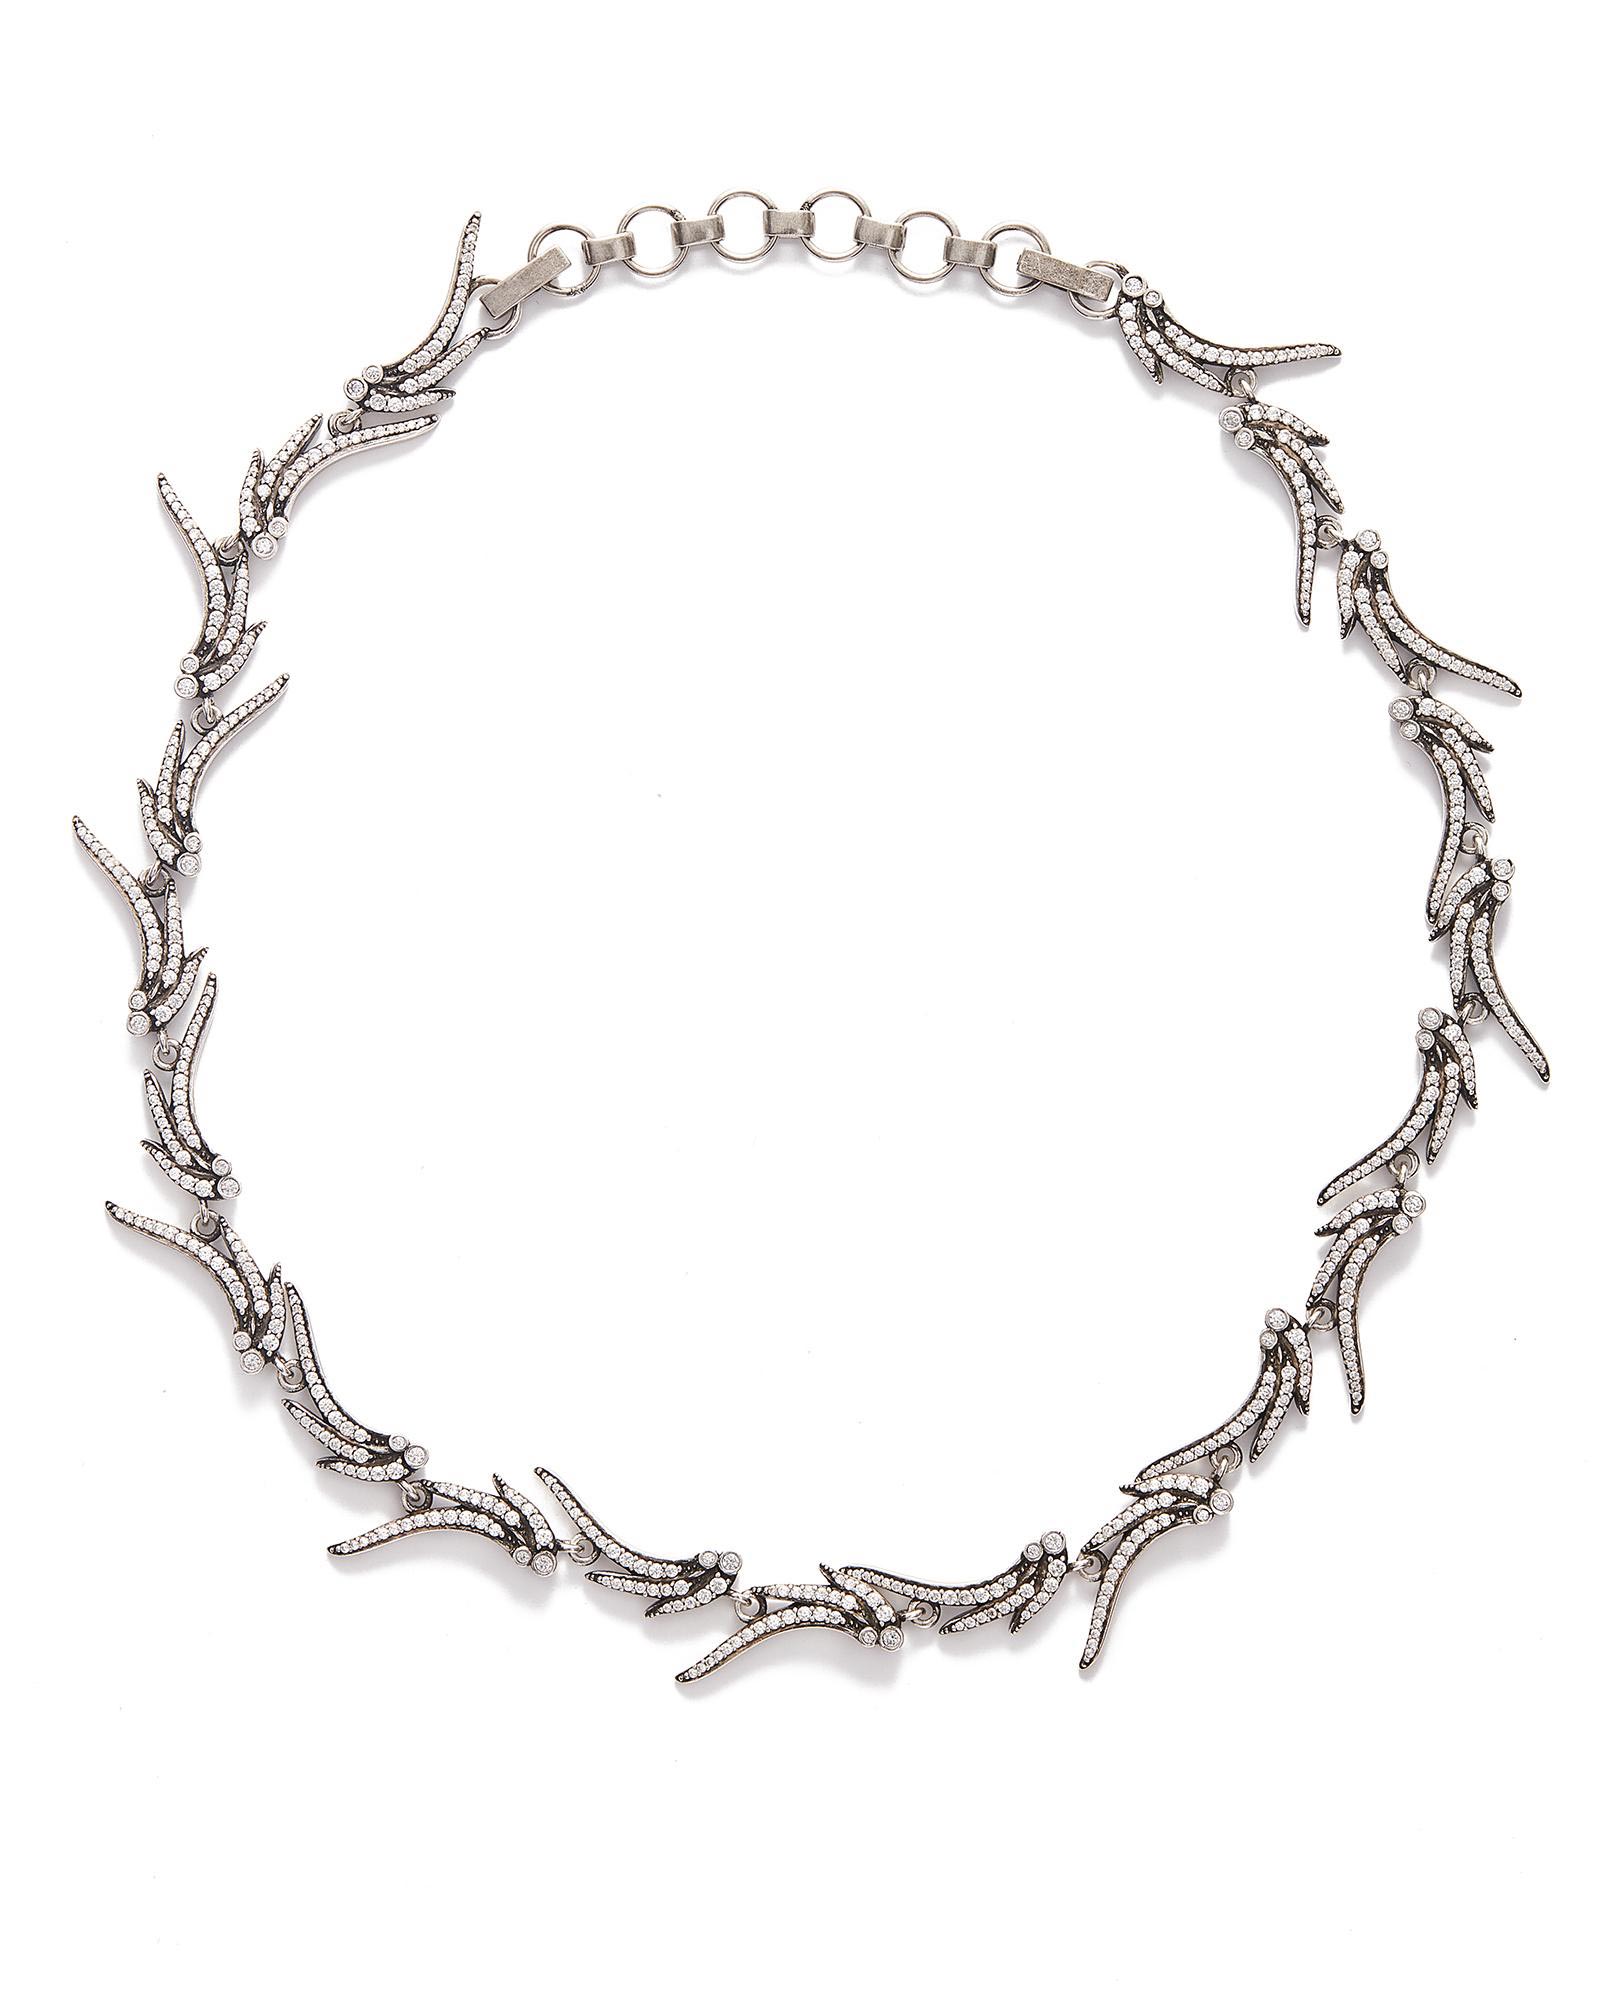 Cleo Statement Necklace in Silver | Kendra Scott Jewelry